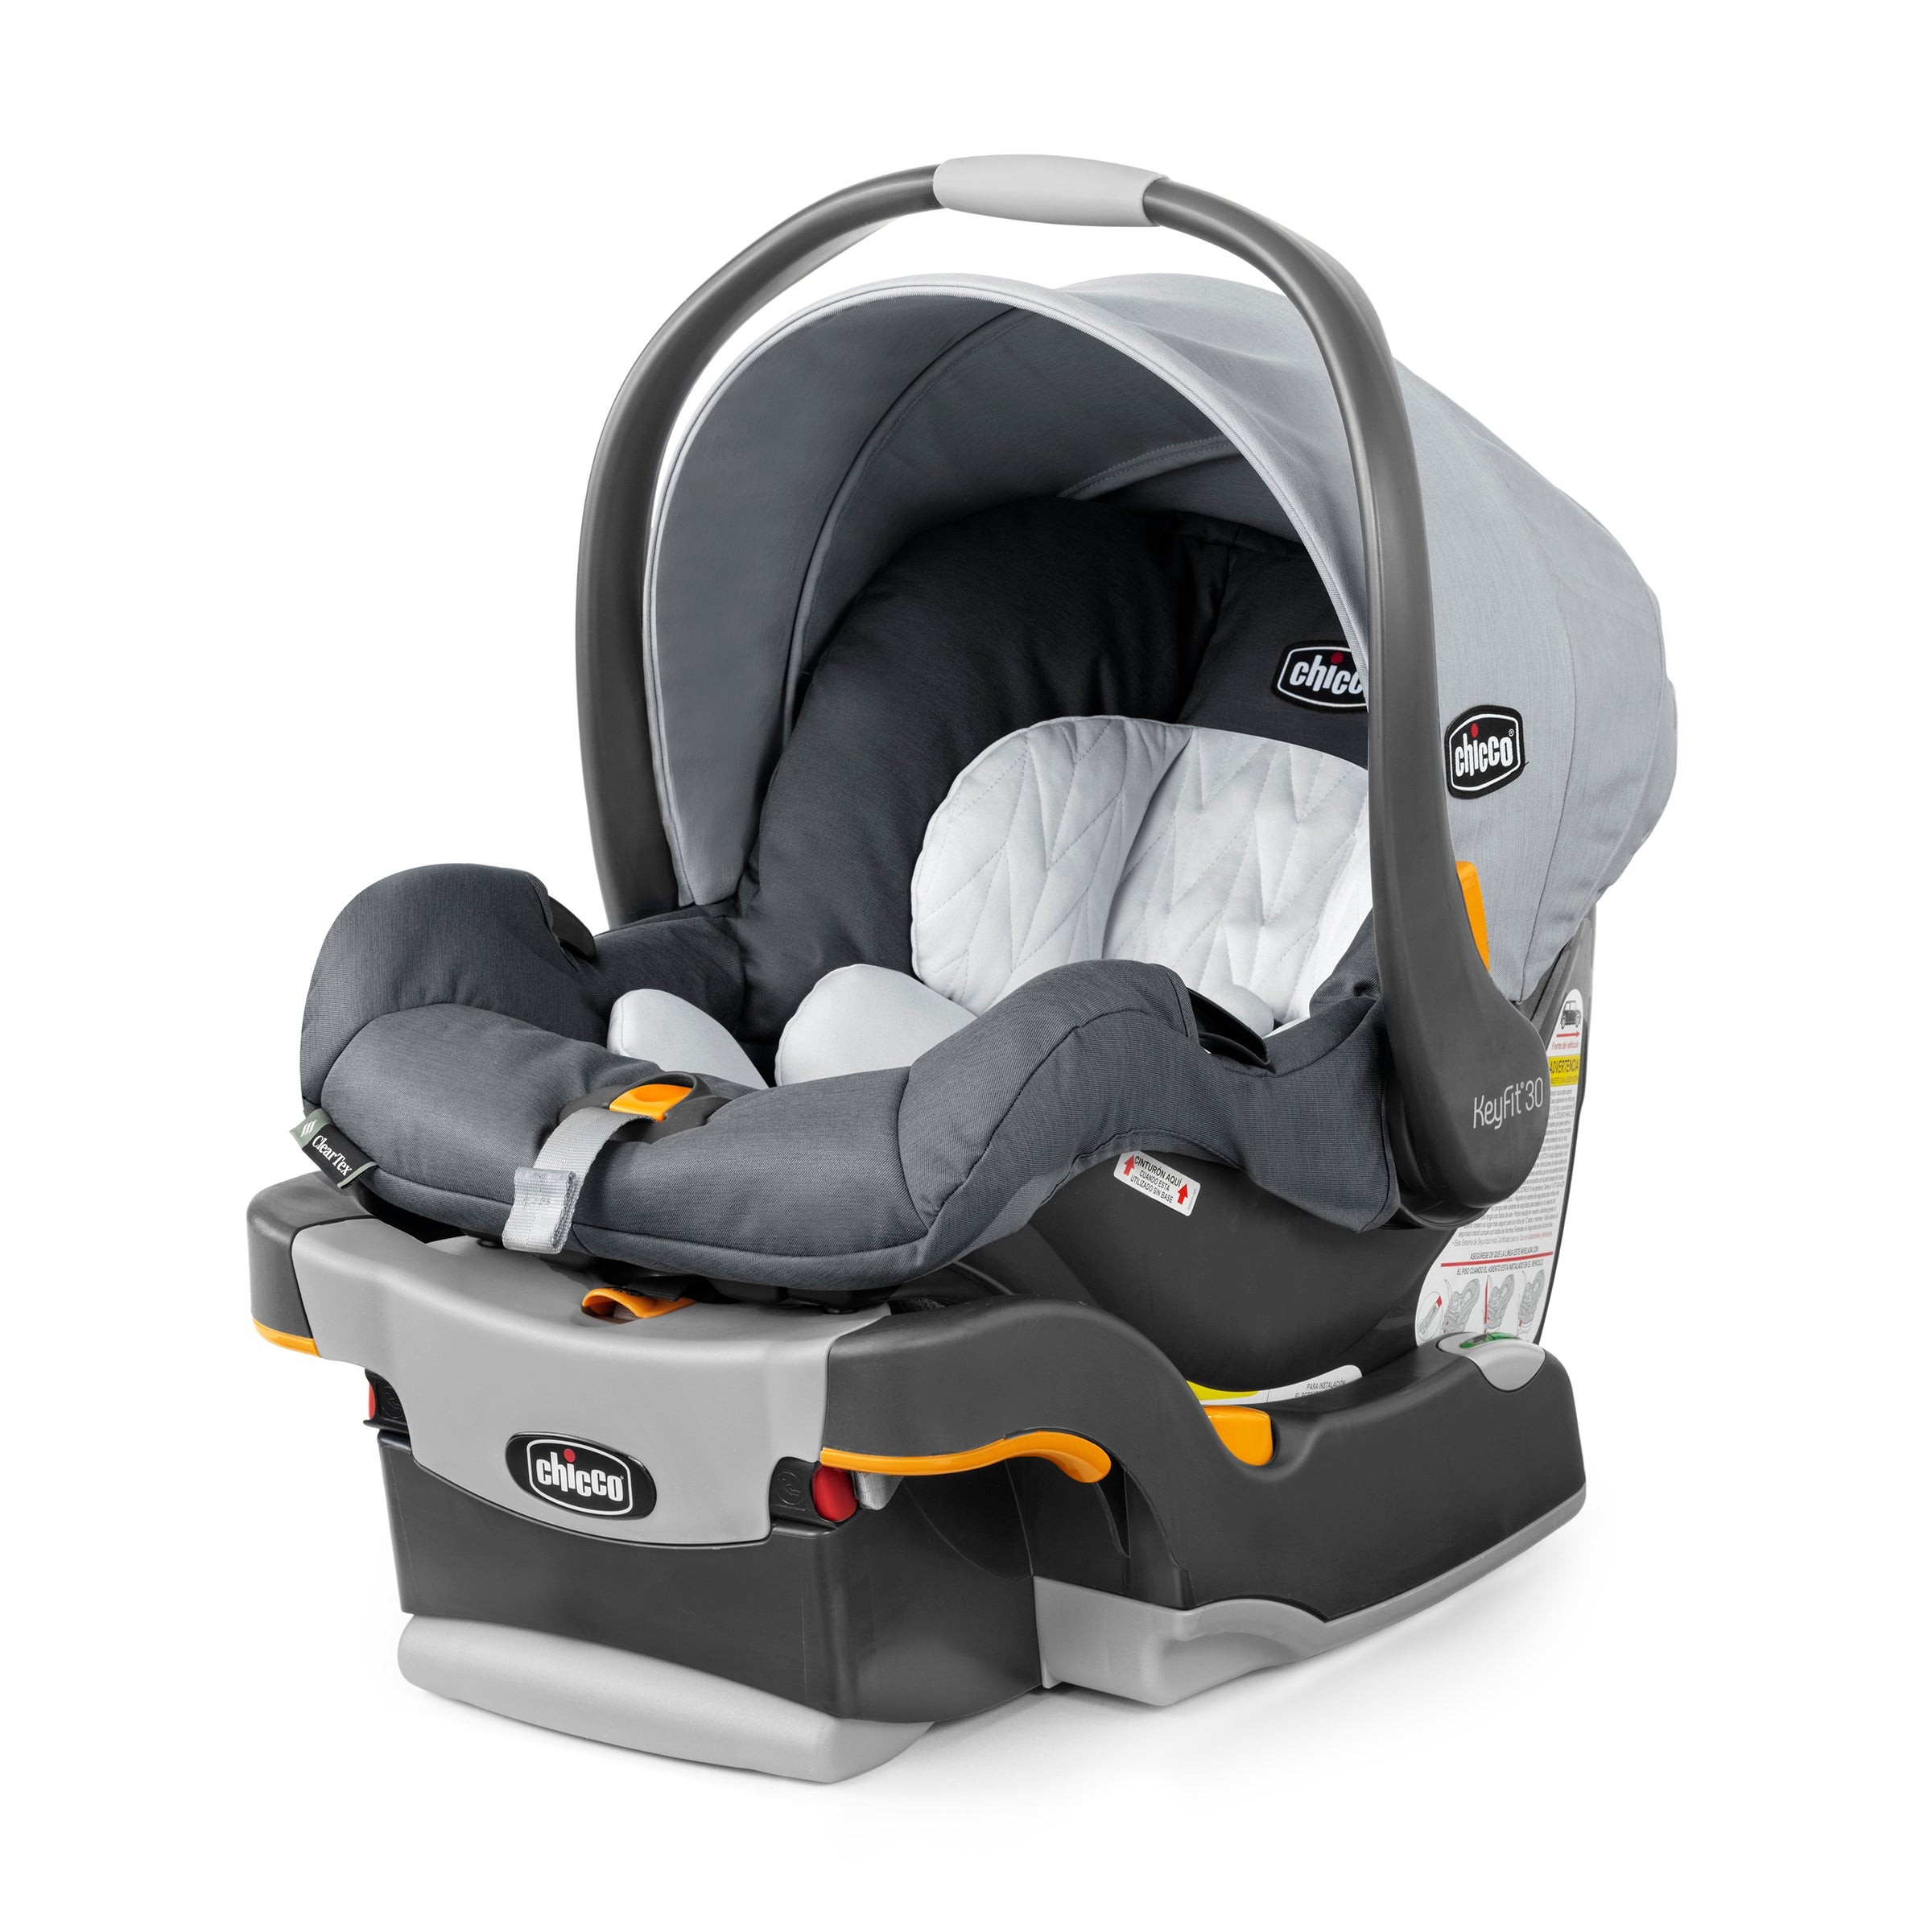 KeyFit 30 ClearTex Infant Car Seat Slate